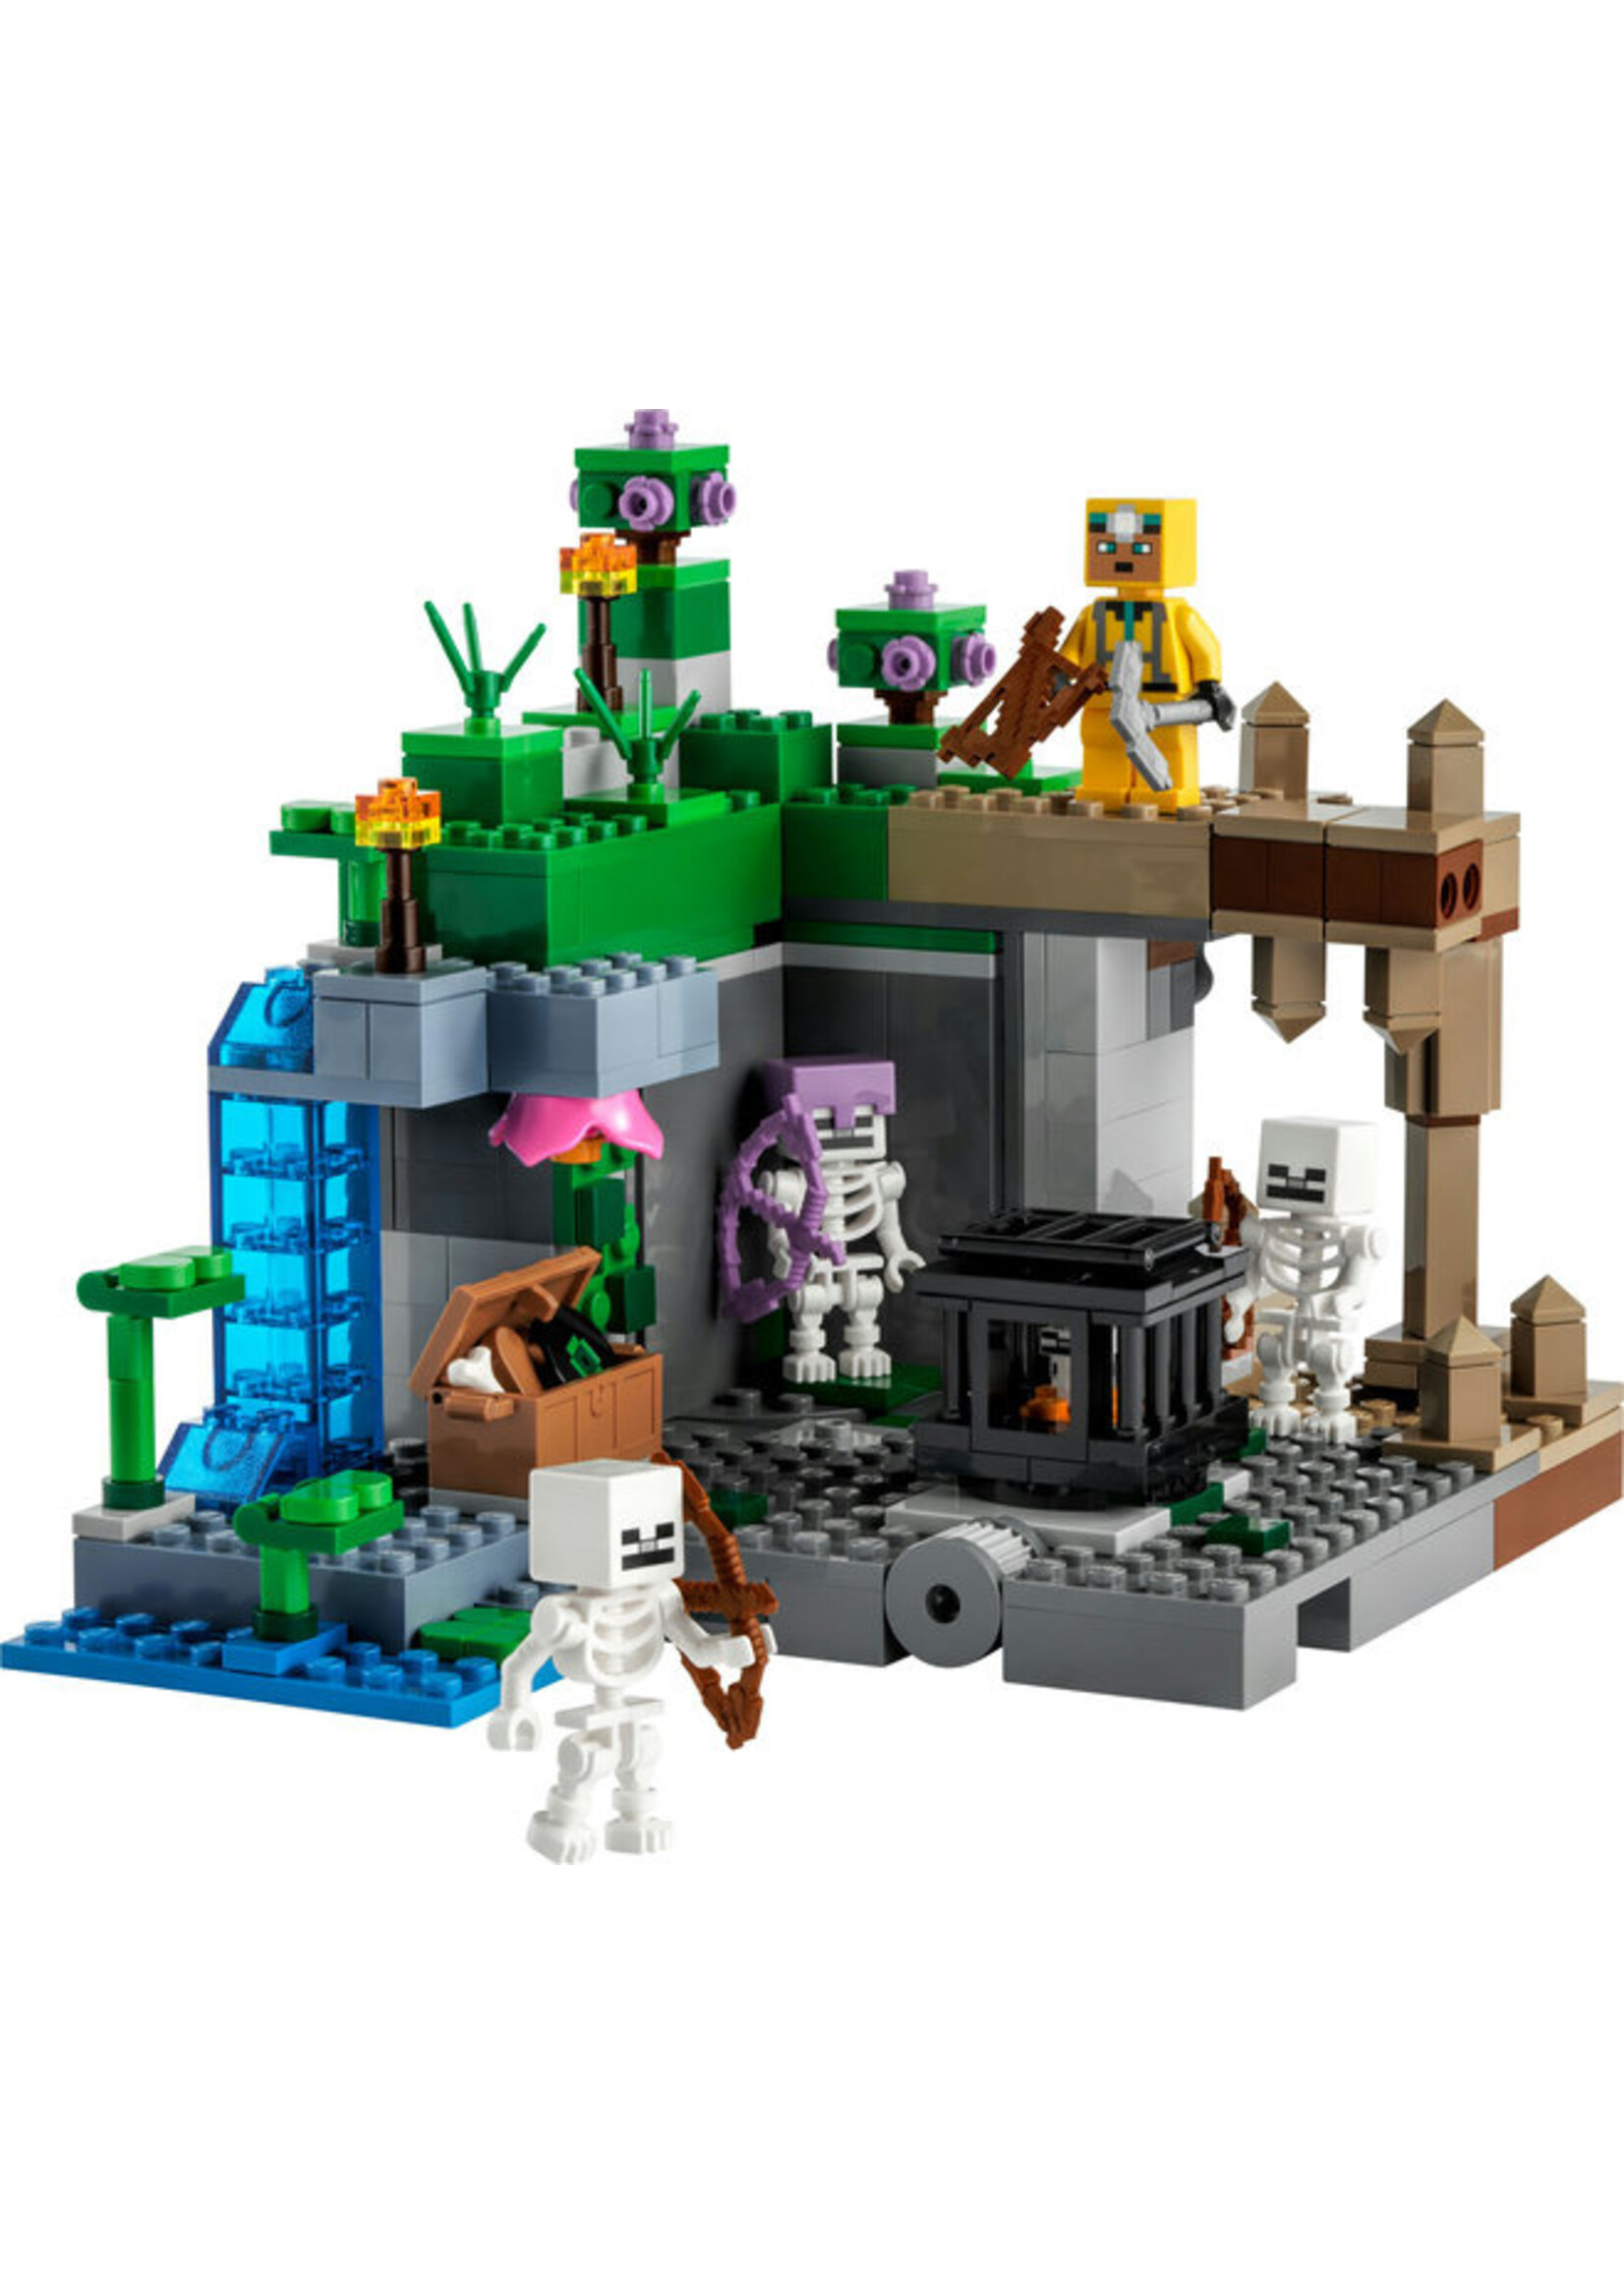 LEGO 21189 - The Skeleton Dungeon